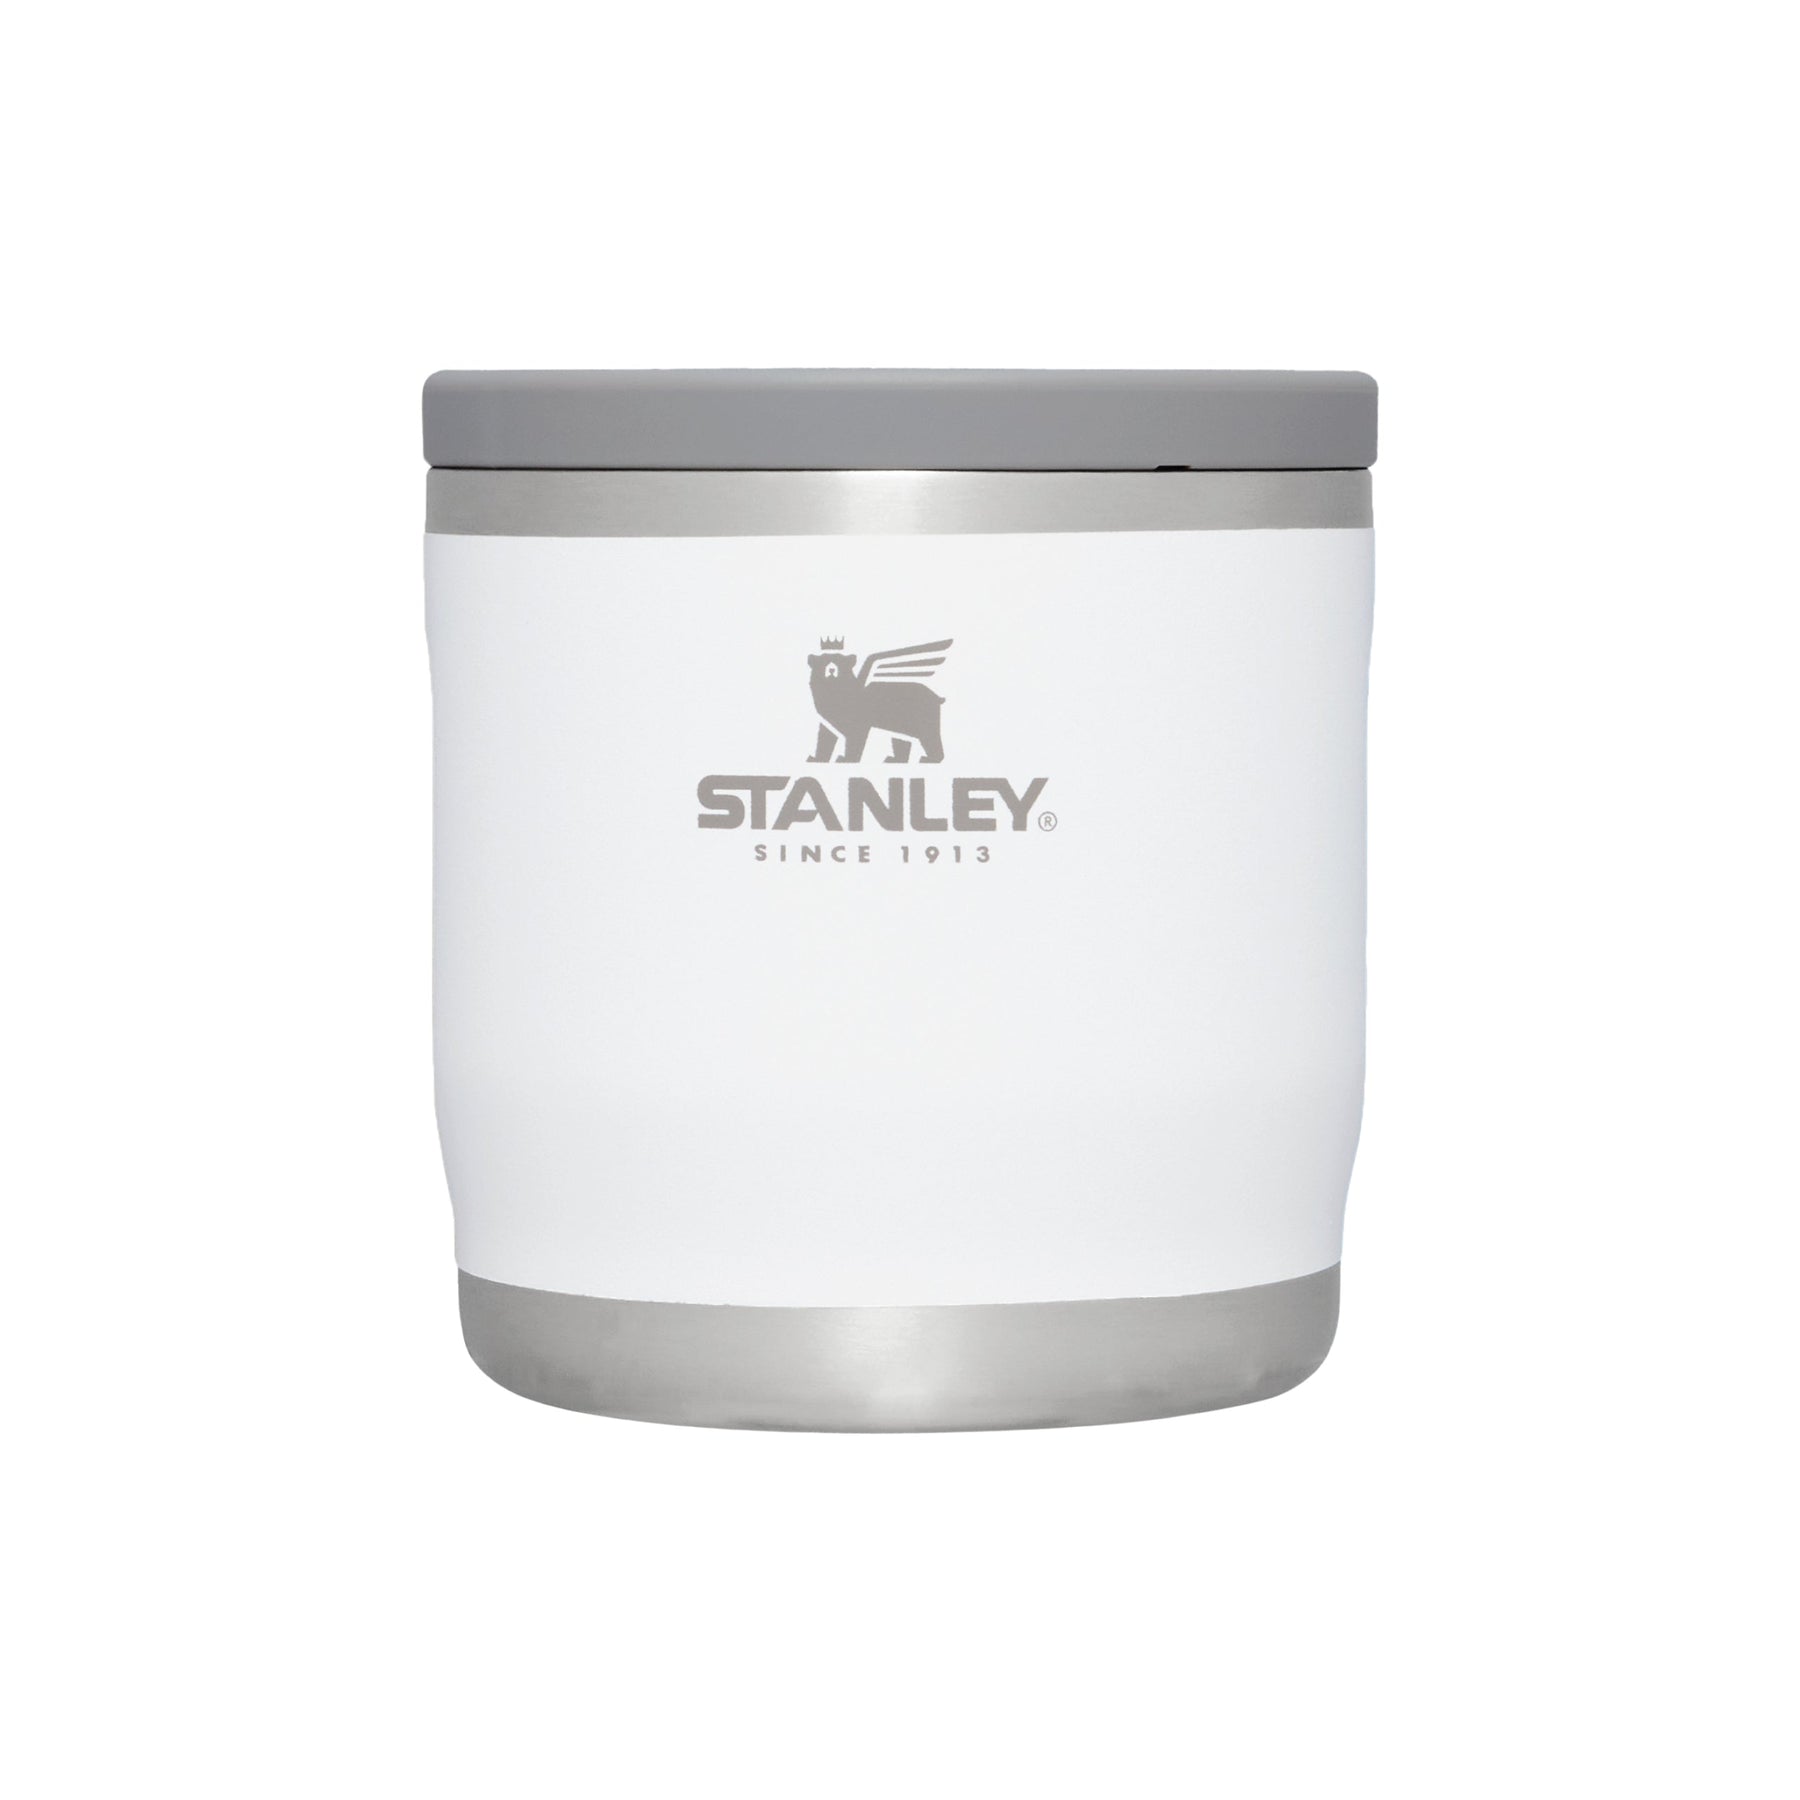 Stanley 14 oz. Classic Legendary Food Jar with Spork, Hammertone Green - Recycled SS